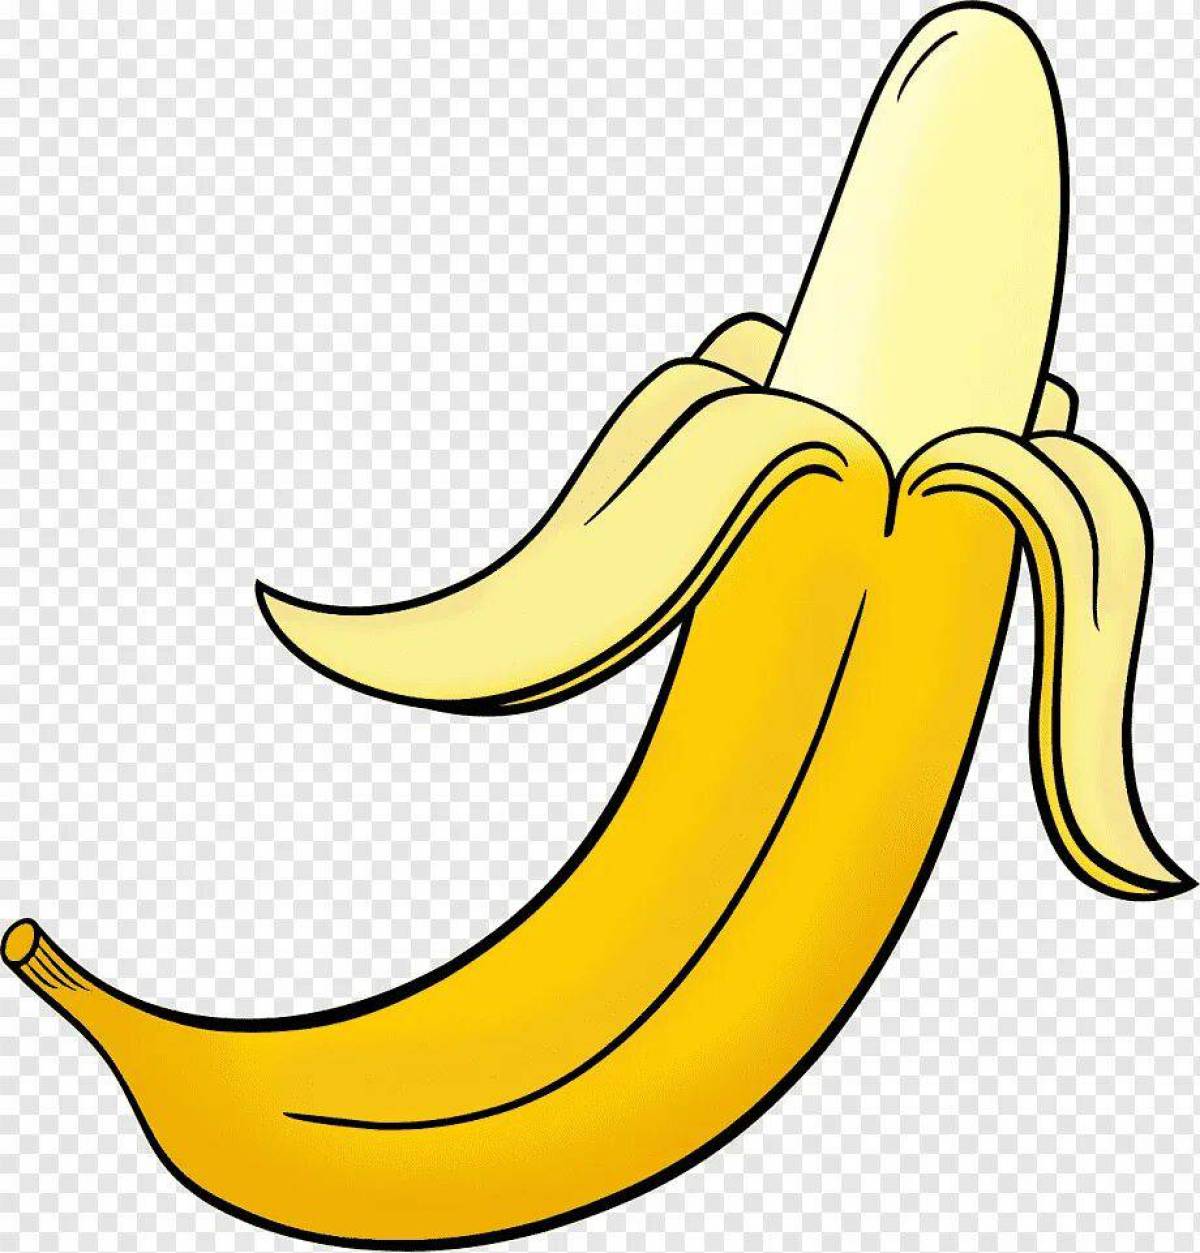 Картинка банан. Бананы мультяшные. Нарисовать банан. Стилизованный банан. Банан рисунок для детей.